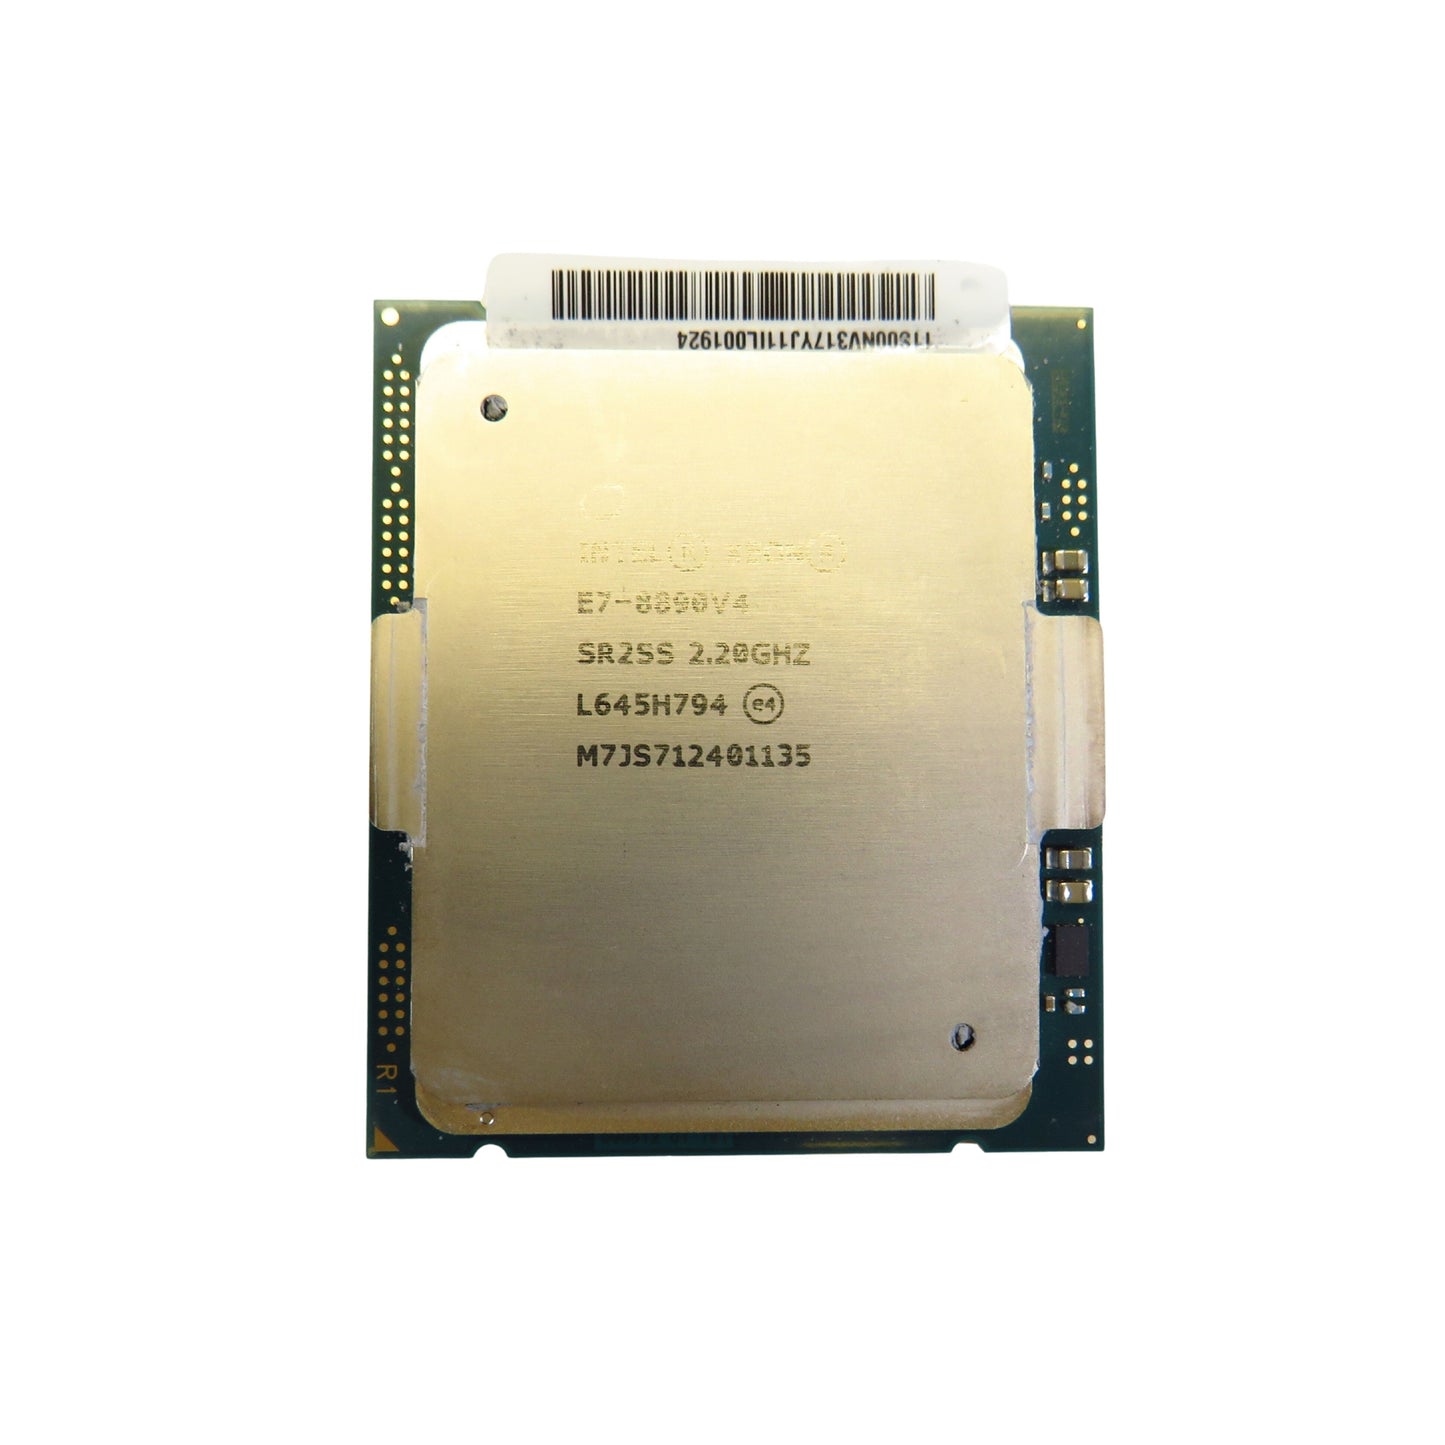 Intel SR2SS Xeon E7-8890V4 2.2GHz 24 Core LGA2011 Server CPU Processor (Refurbished)